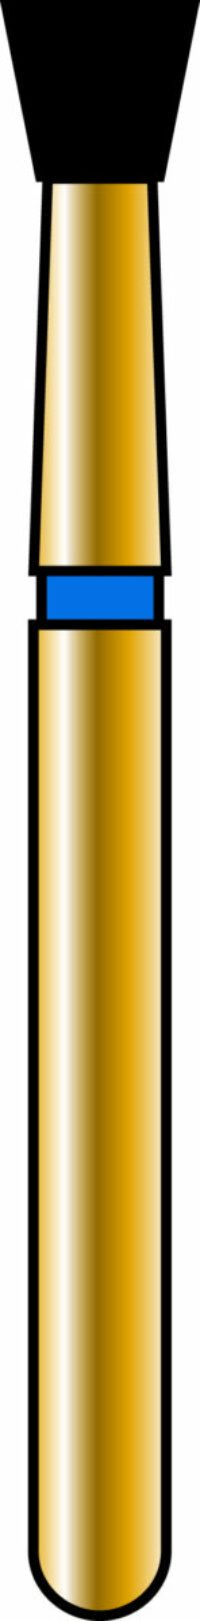 Inverted Cone 23-2.1mm Gold Diamond Bur - Coarse Grit